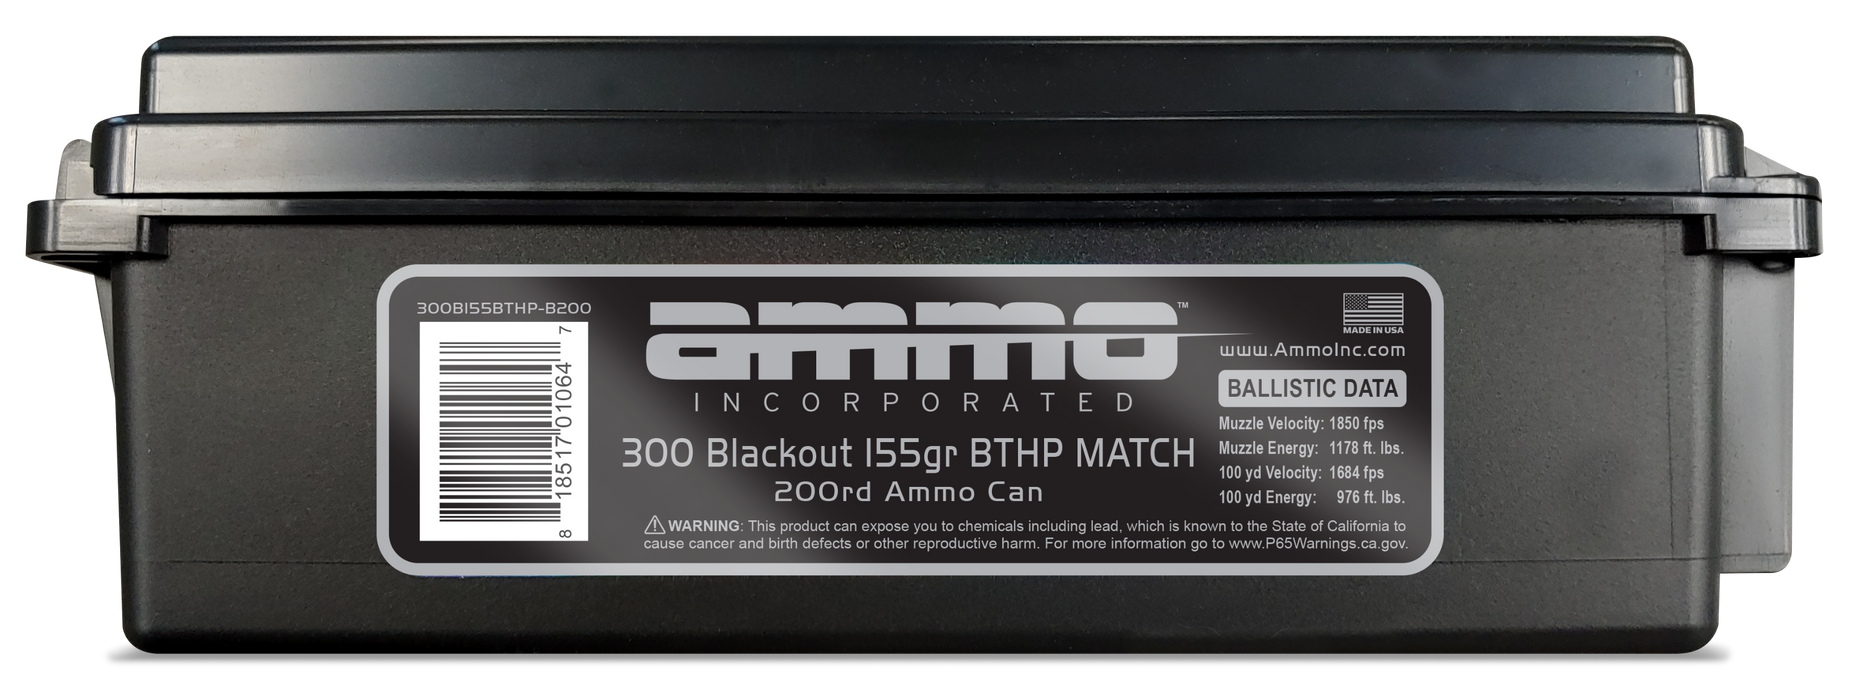 Ammo Inc .300 Blackout 155 gr Signature  Match BTHP - 200 Round Can